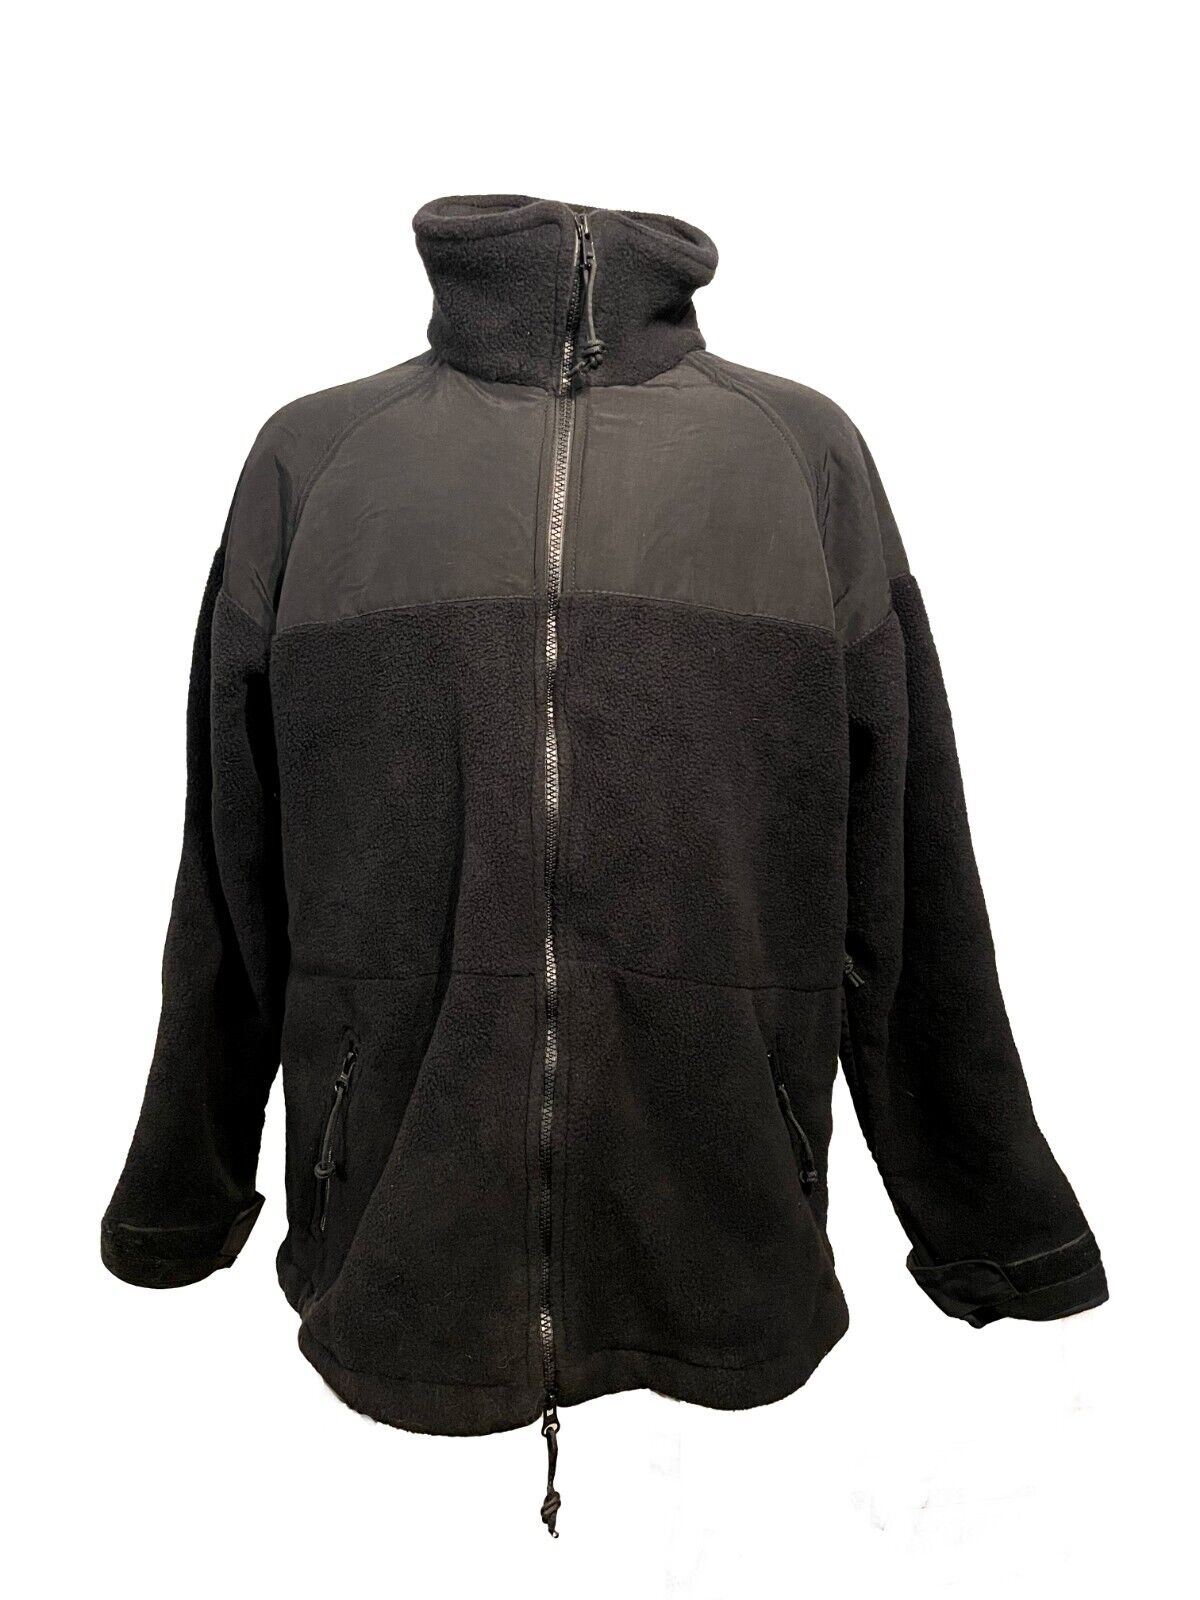 DSCP by Peckham US Military  Black Polartec  Fleece Cold Weather Jacket X-Large